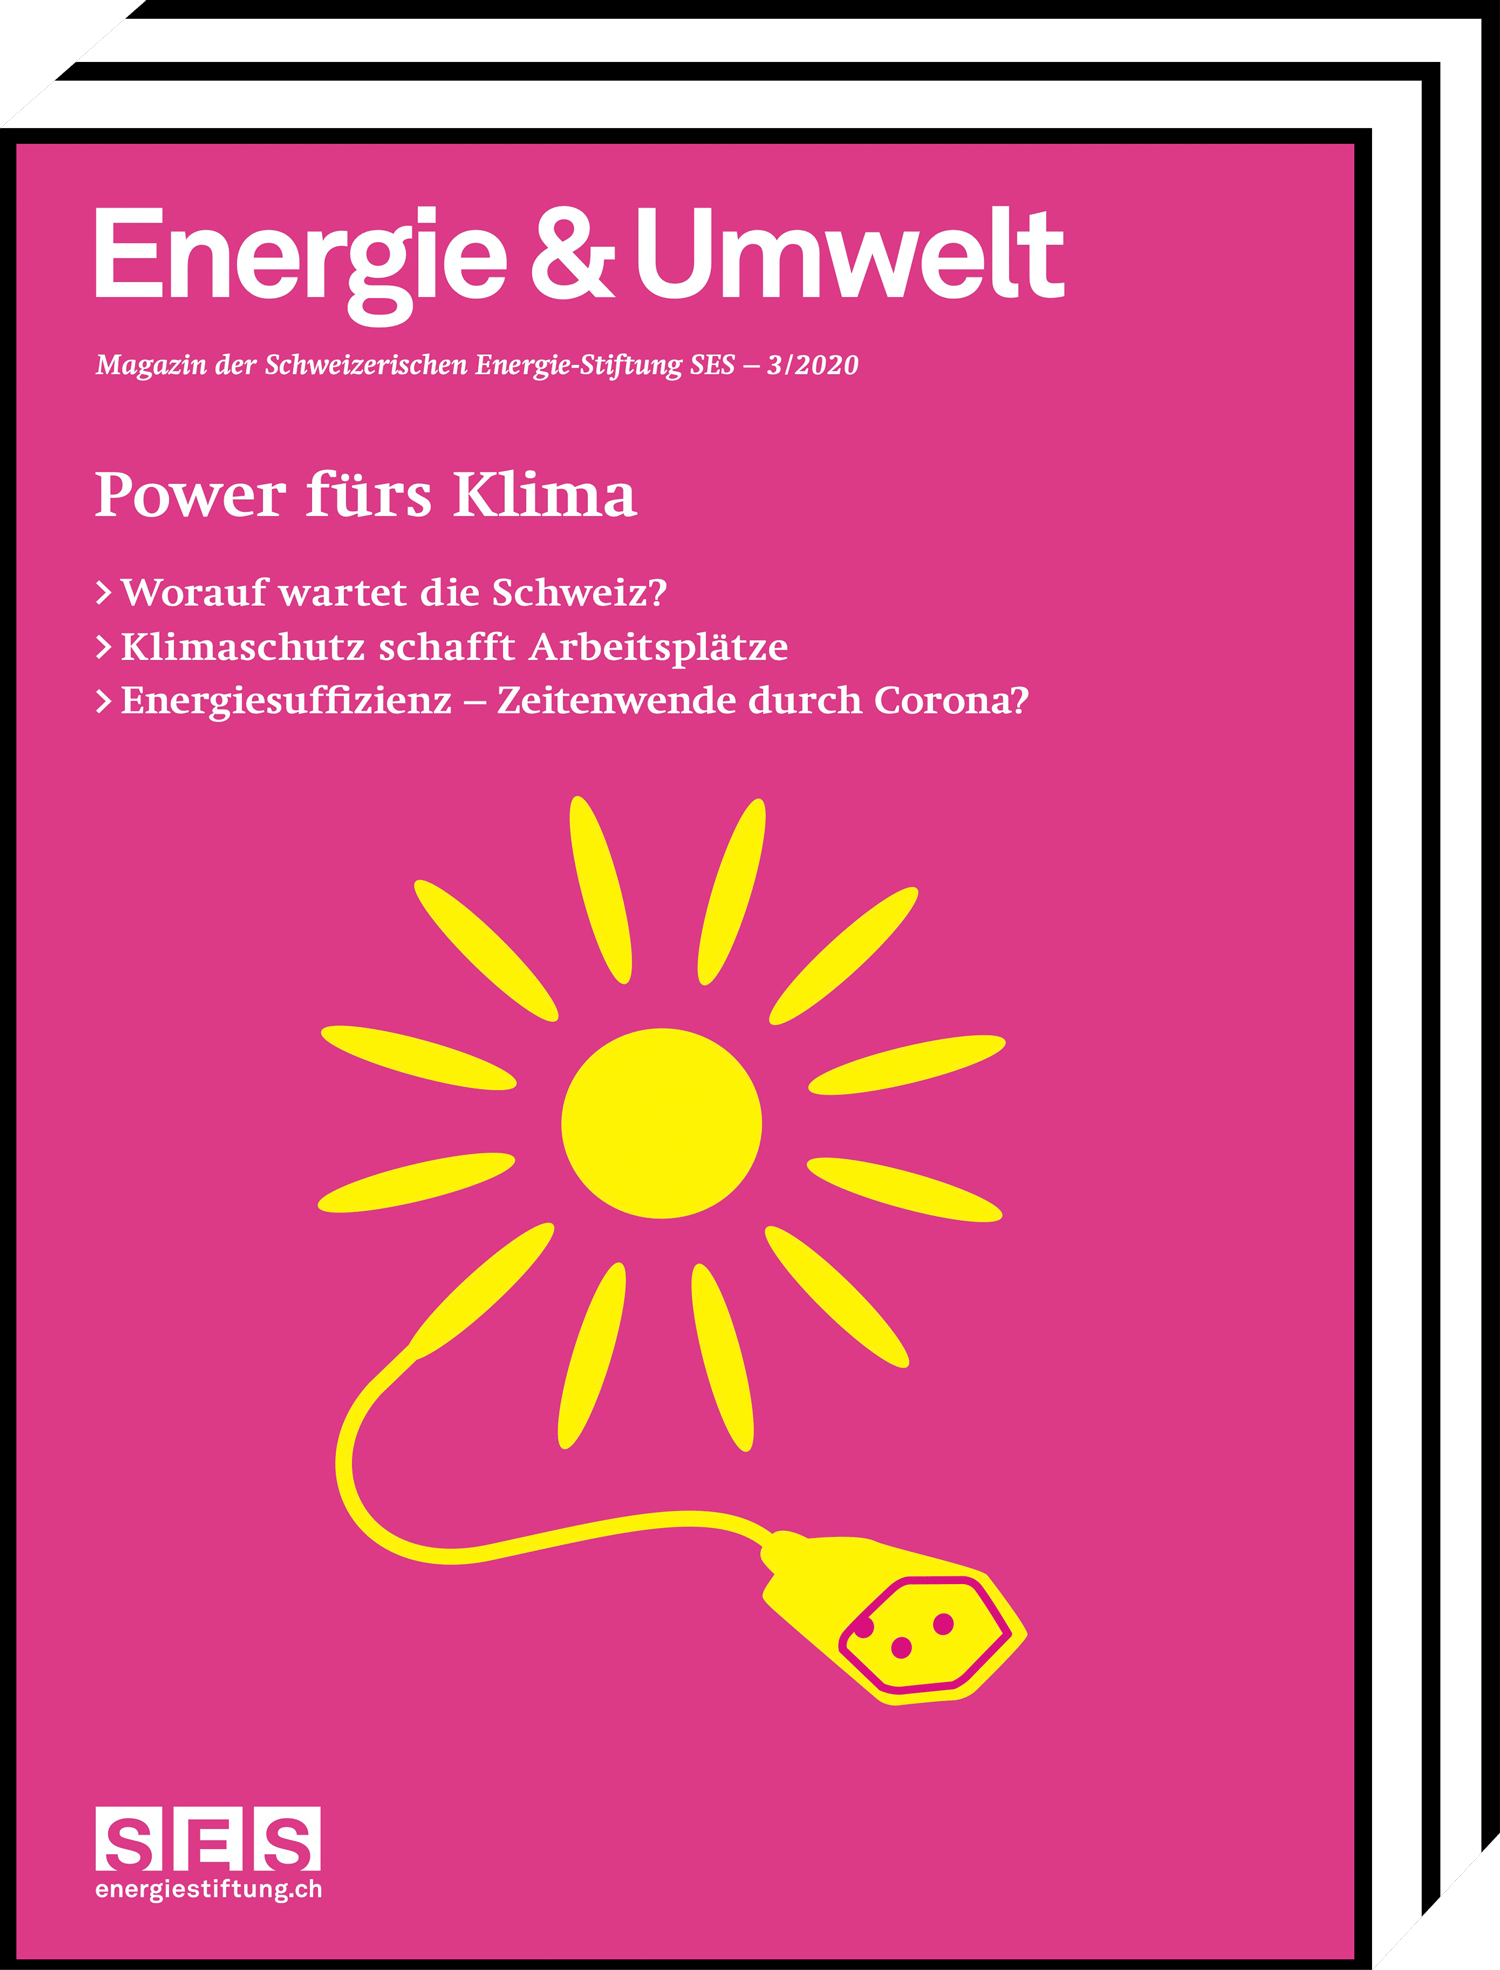 Energie&Umwelt - Power fürs Klima